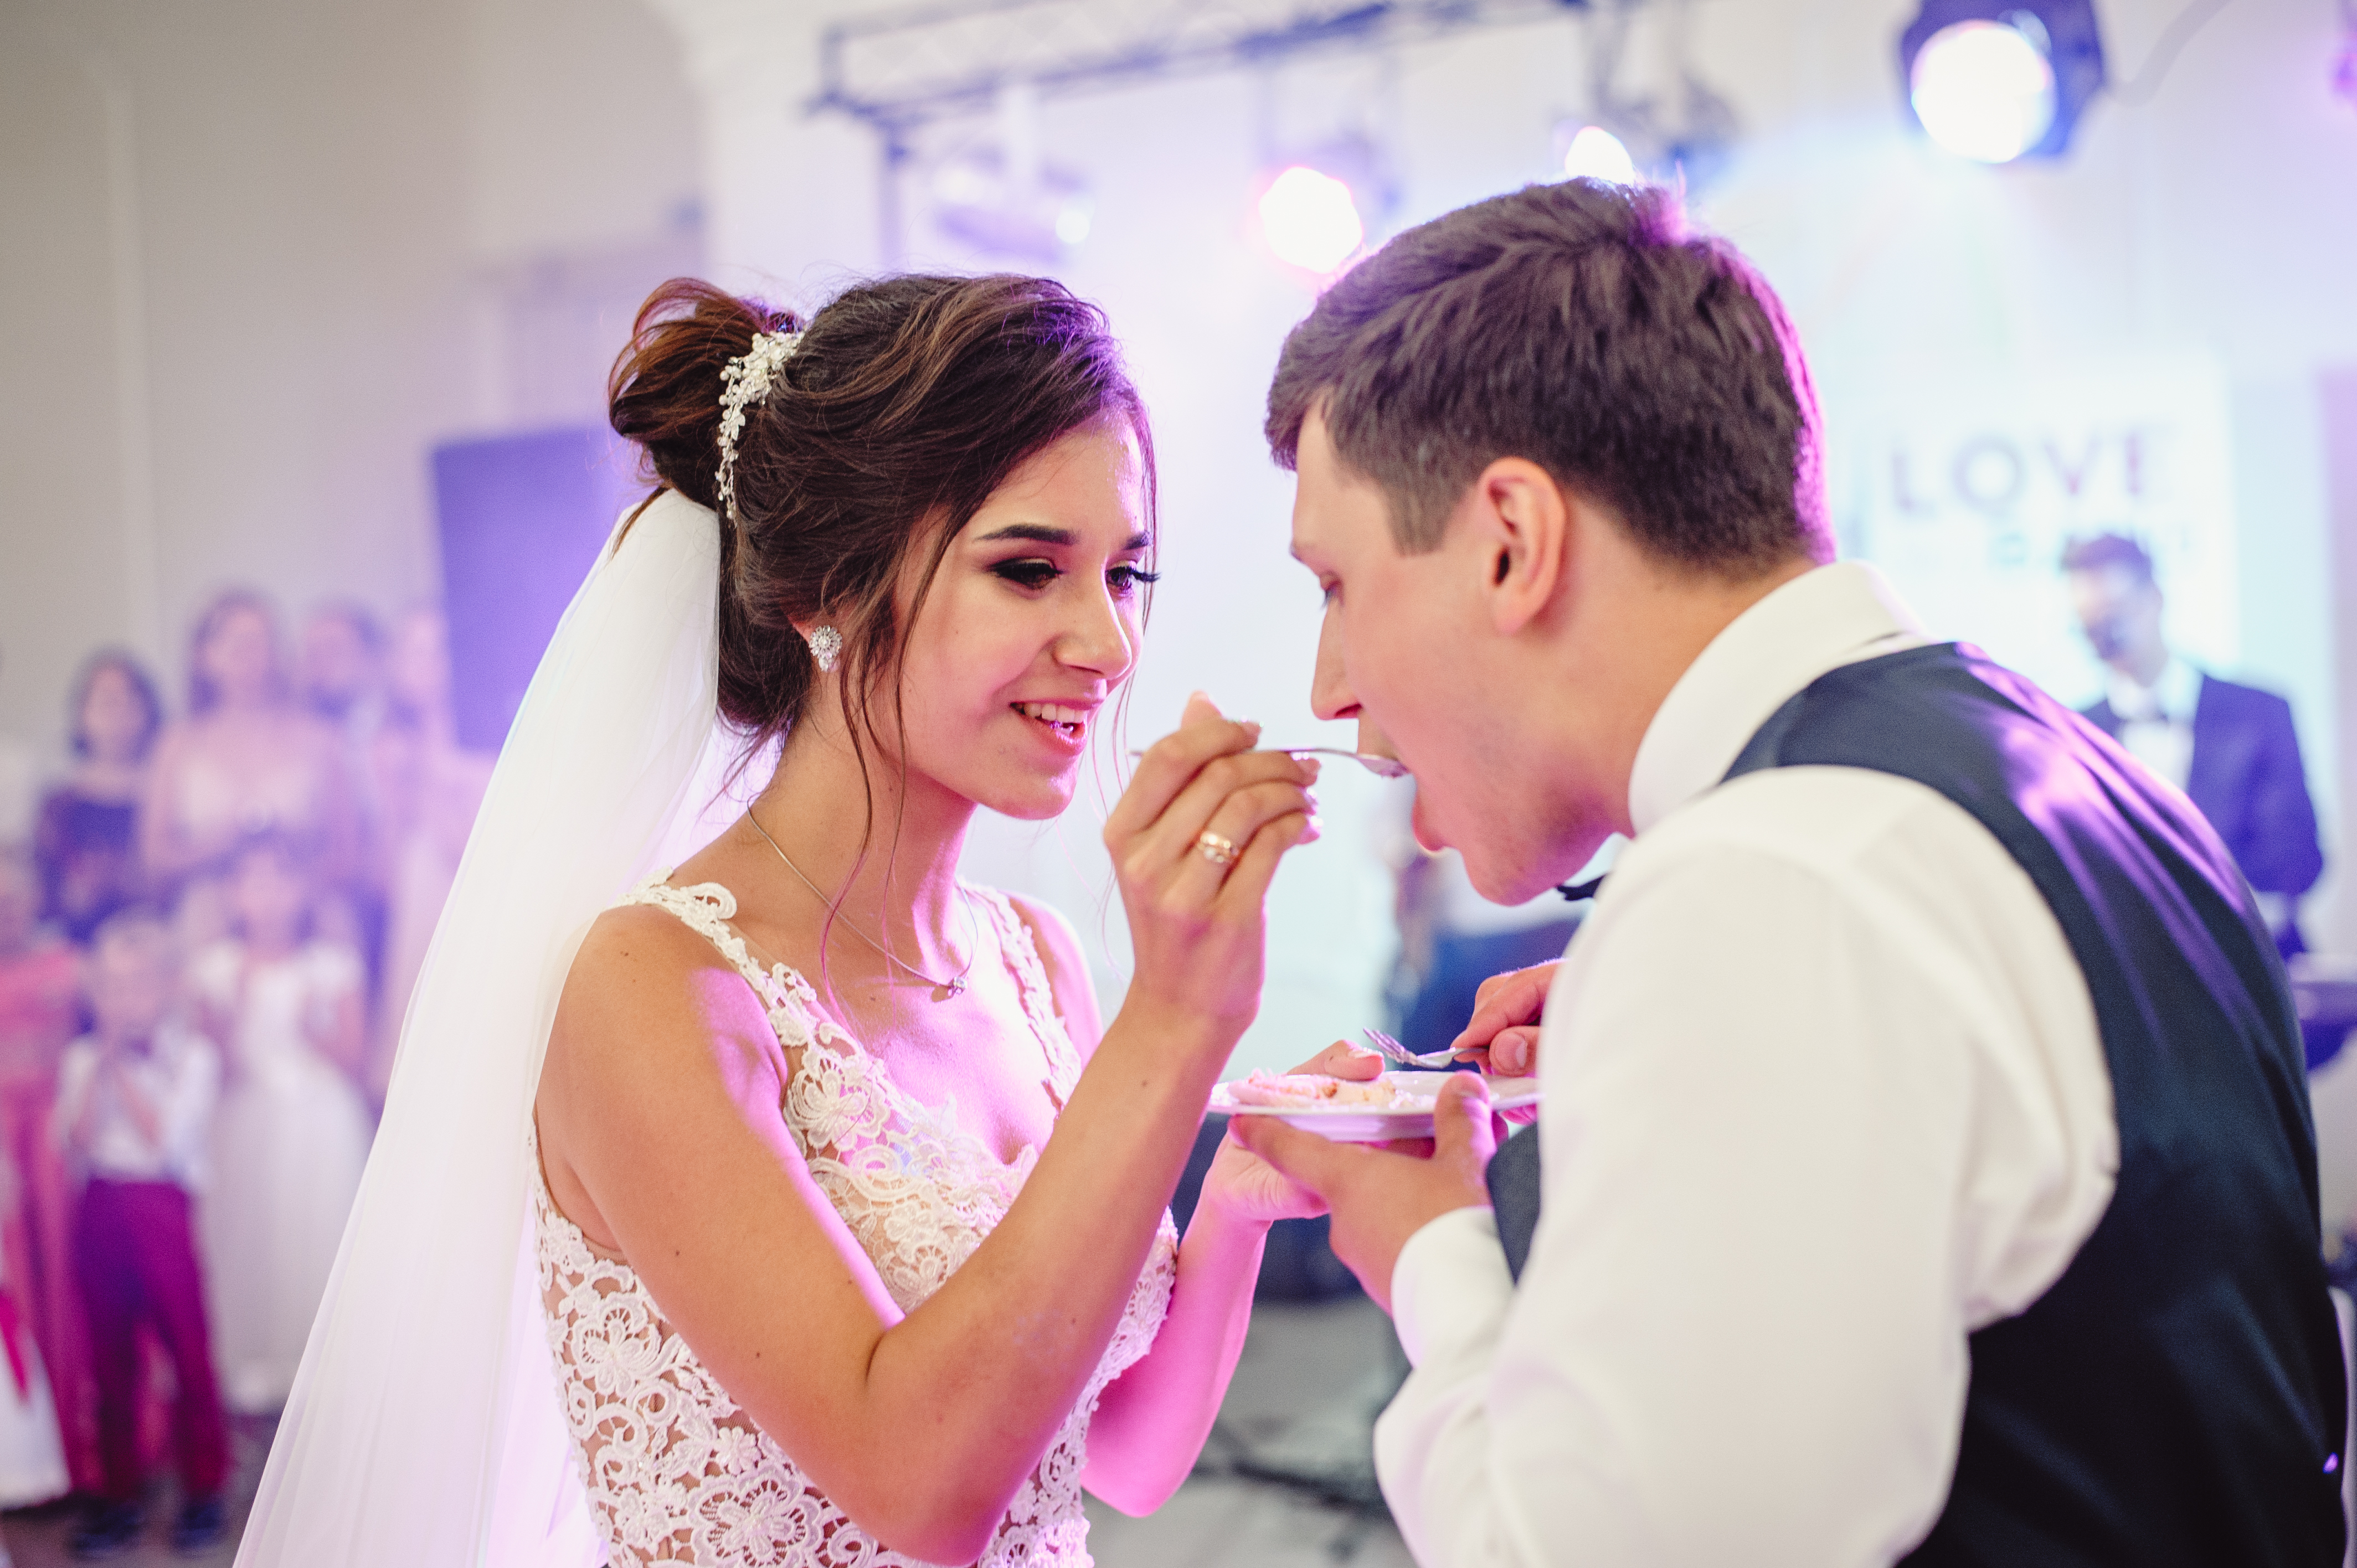 A bride feeding her groom a piece of cake | Source: Shutterstock